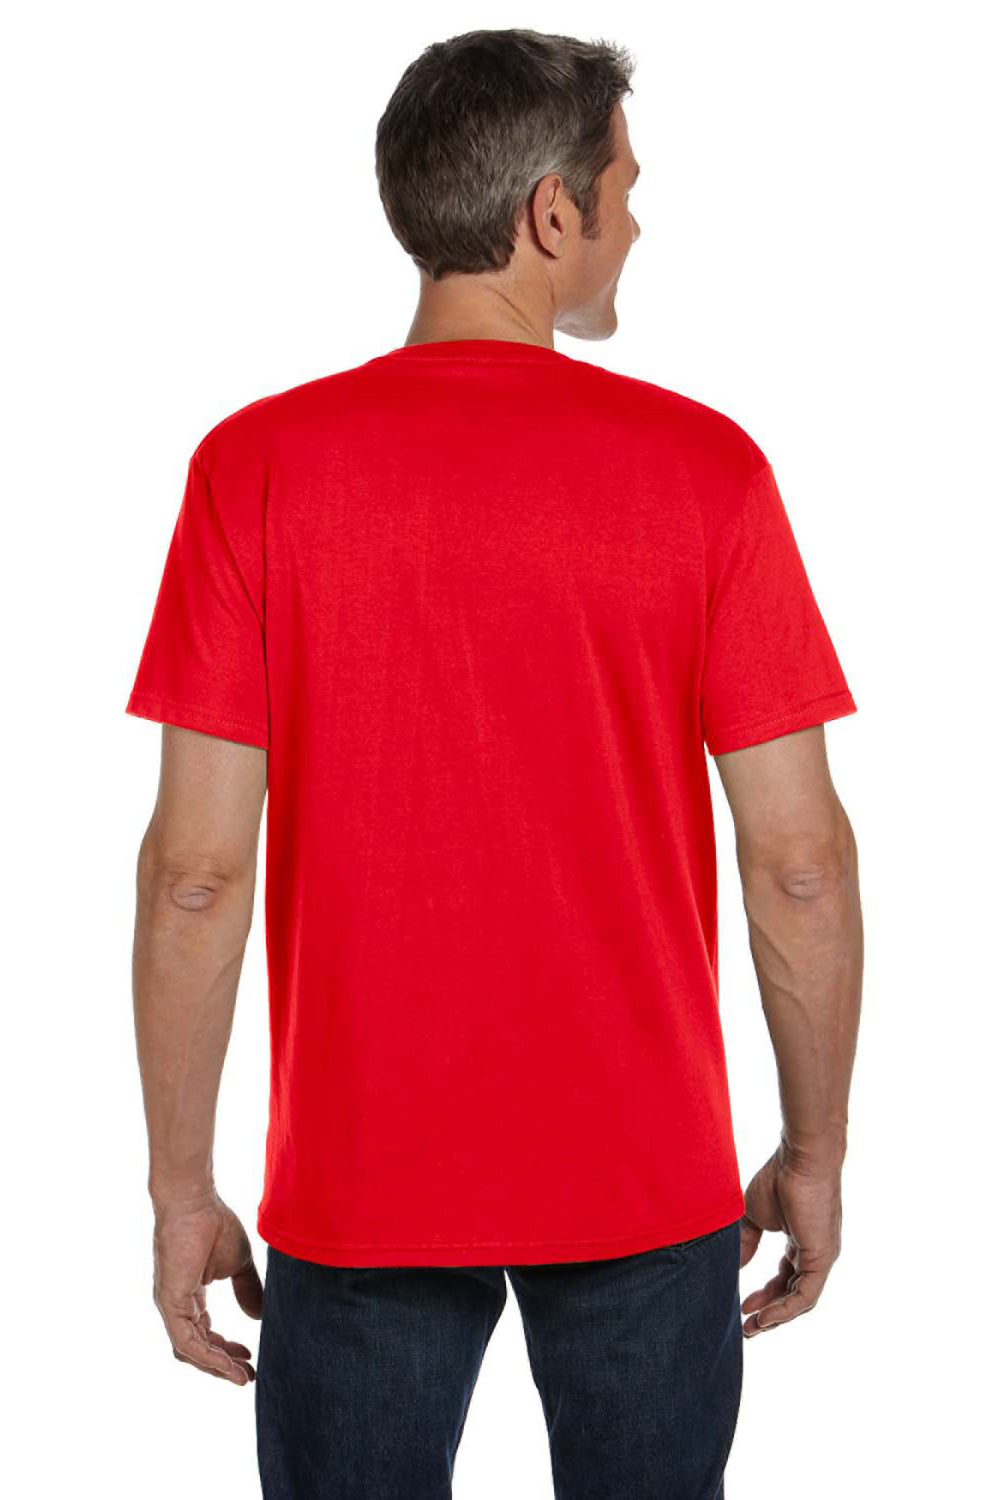 Econscious EC1000 Mens Short Sleeve Crewneck T-Shirt Red Back